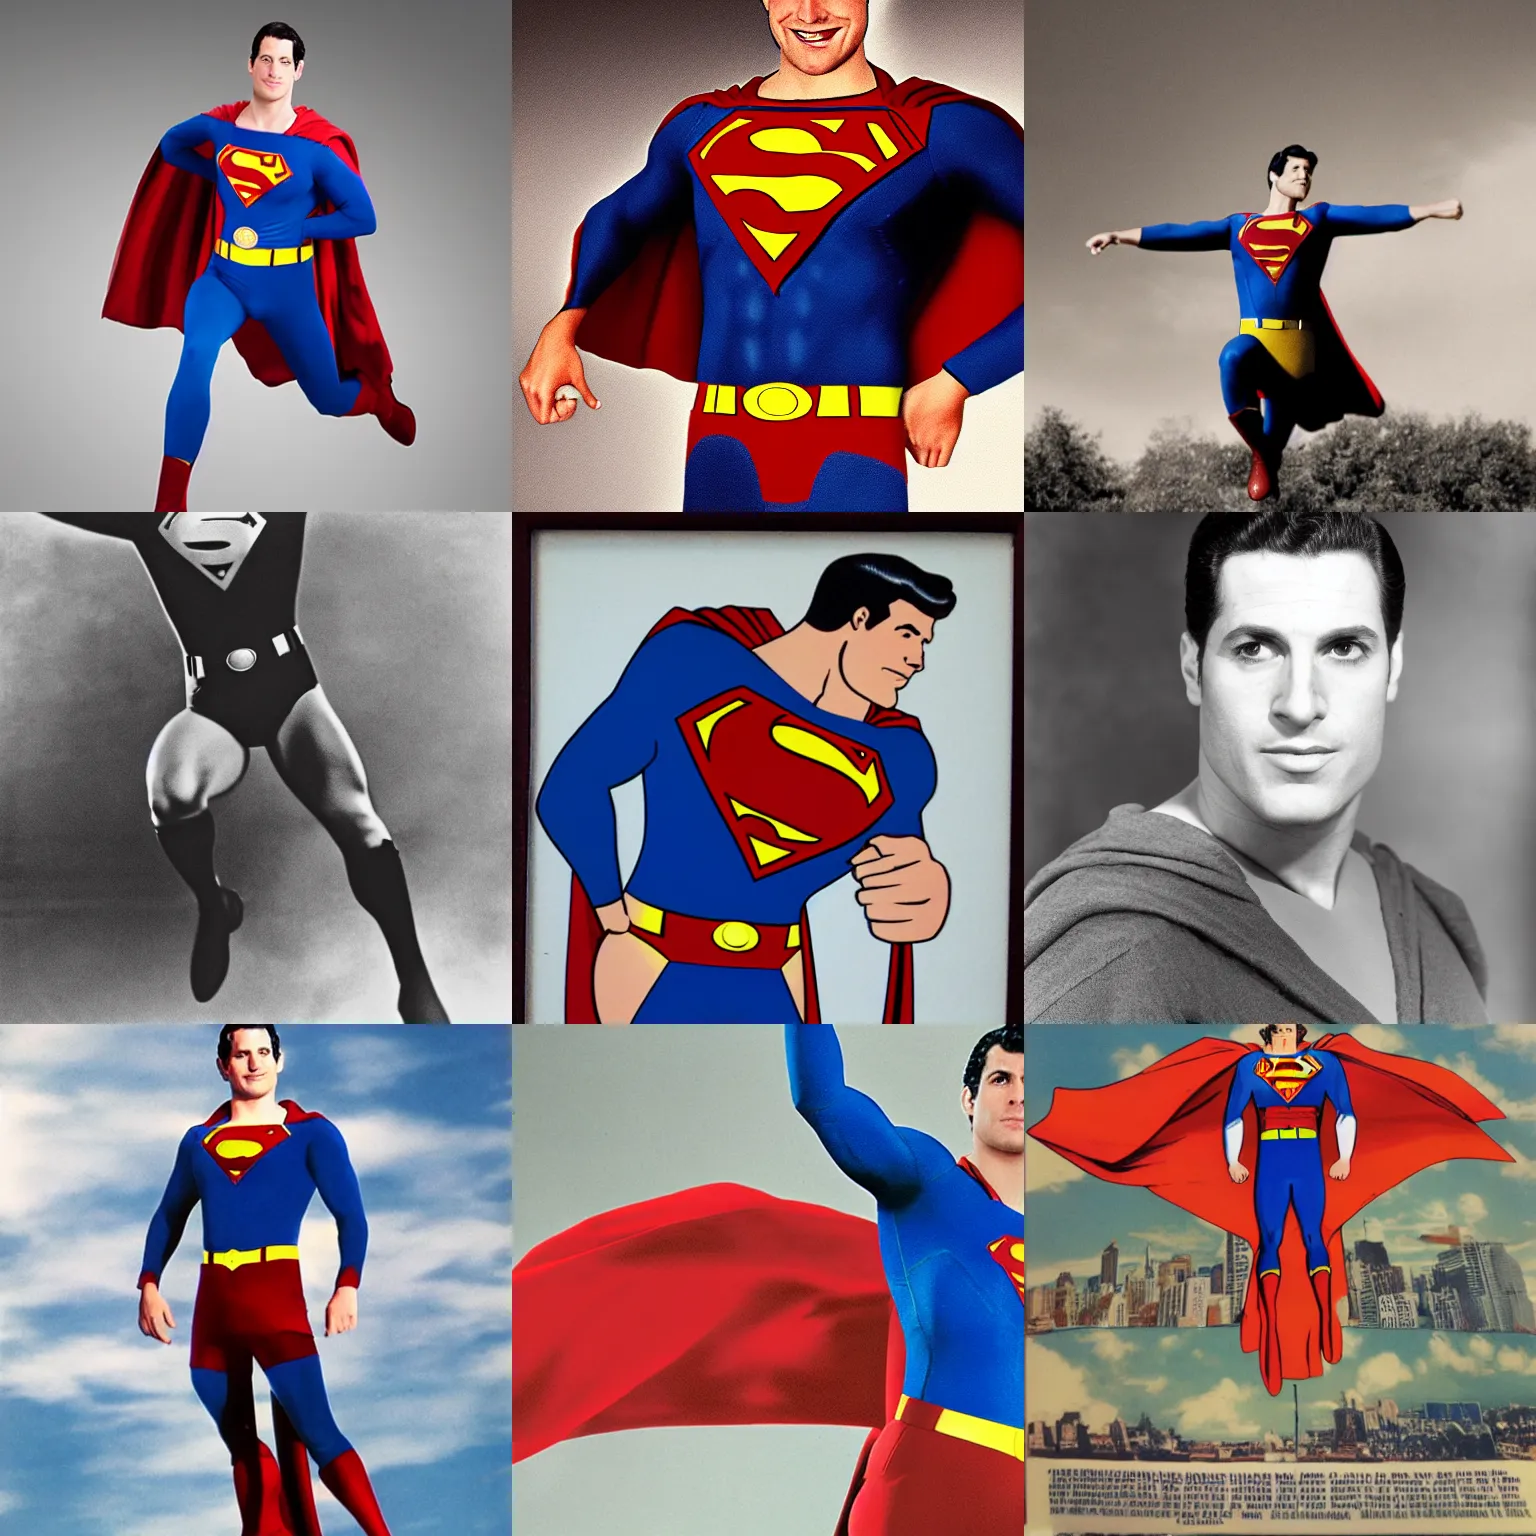 Prompt: lex friedman as superman